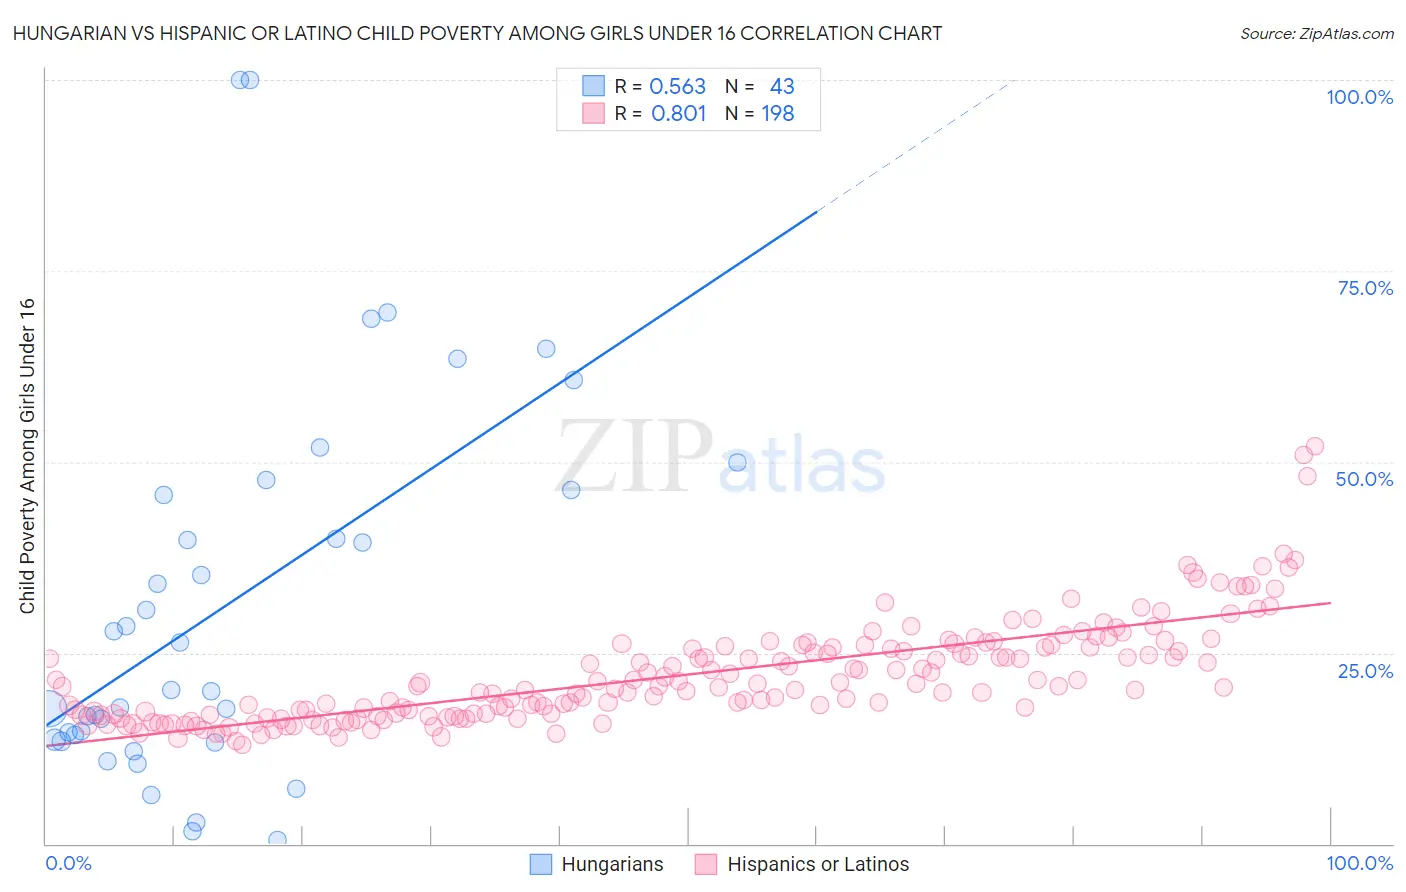 Hungarian vs Hispanic or Latino Child Poverty Among Girls Under 16